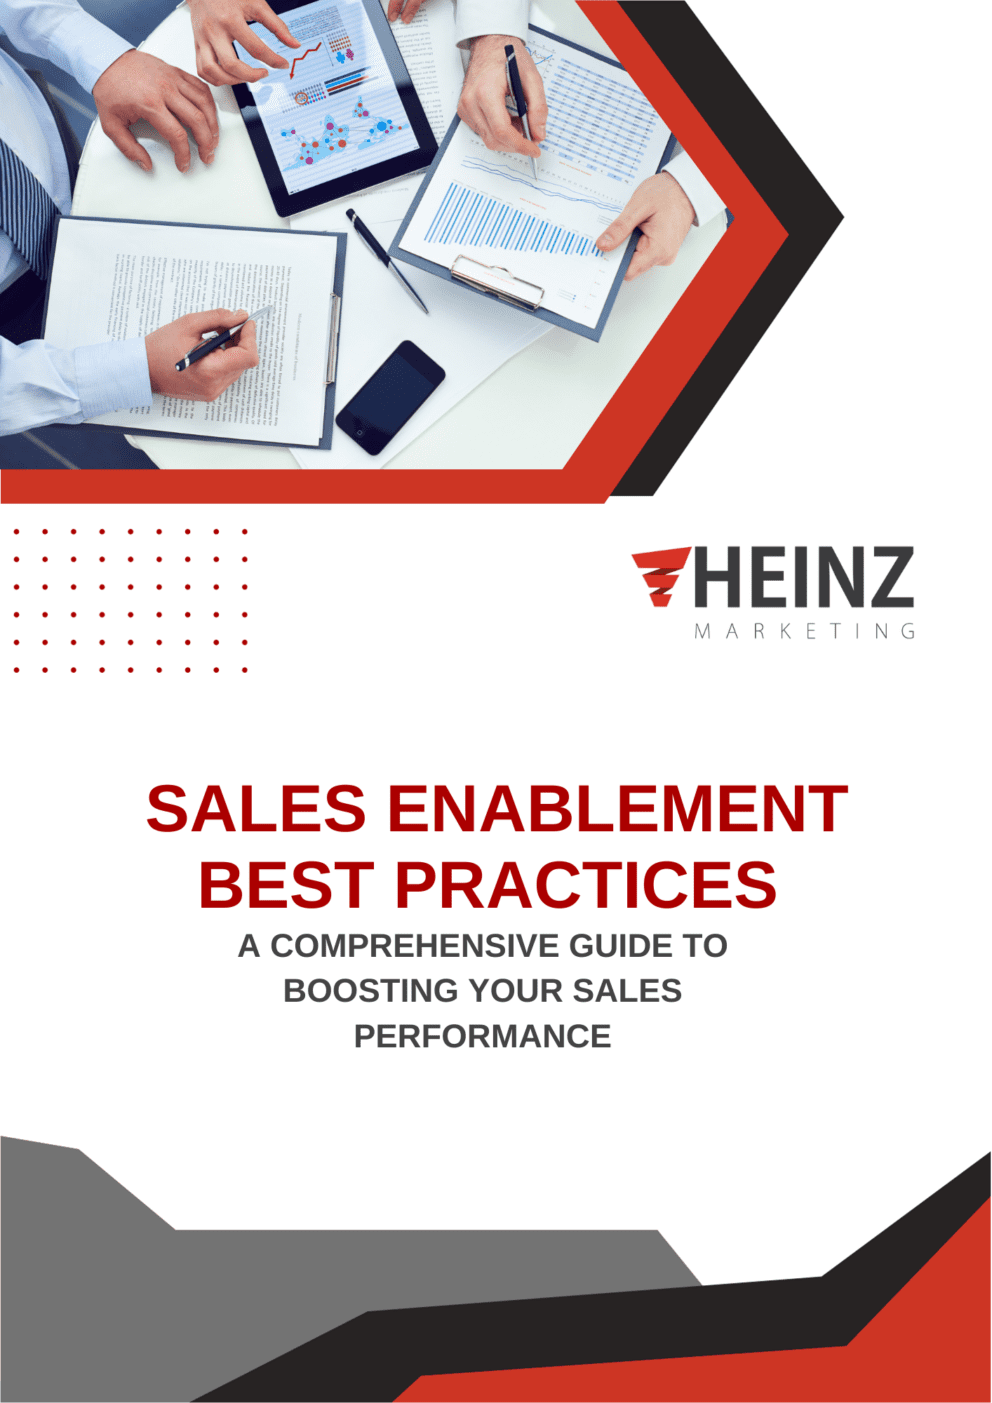 Guide: Sales Enablement Best Practices